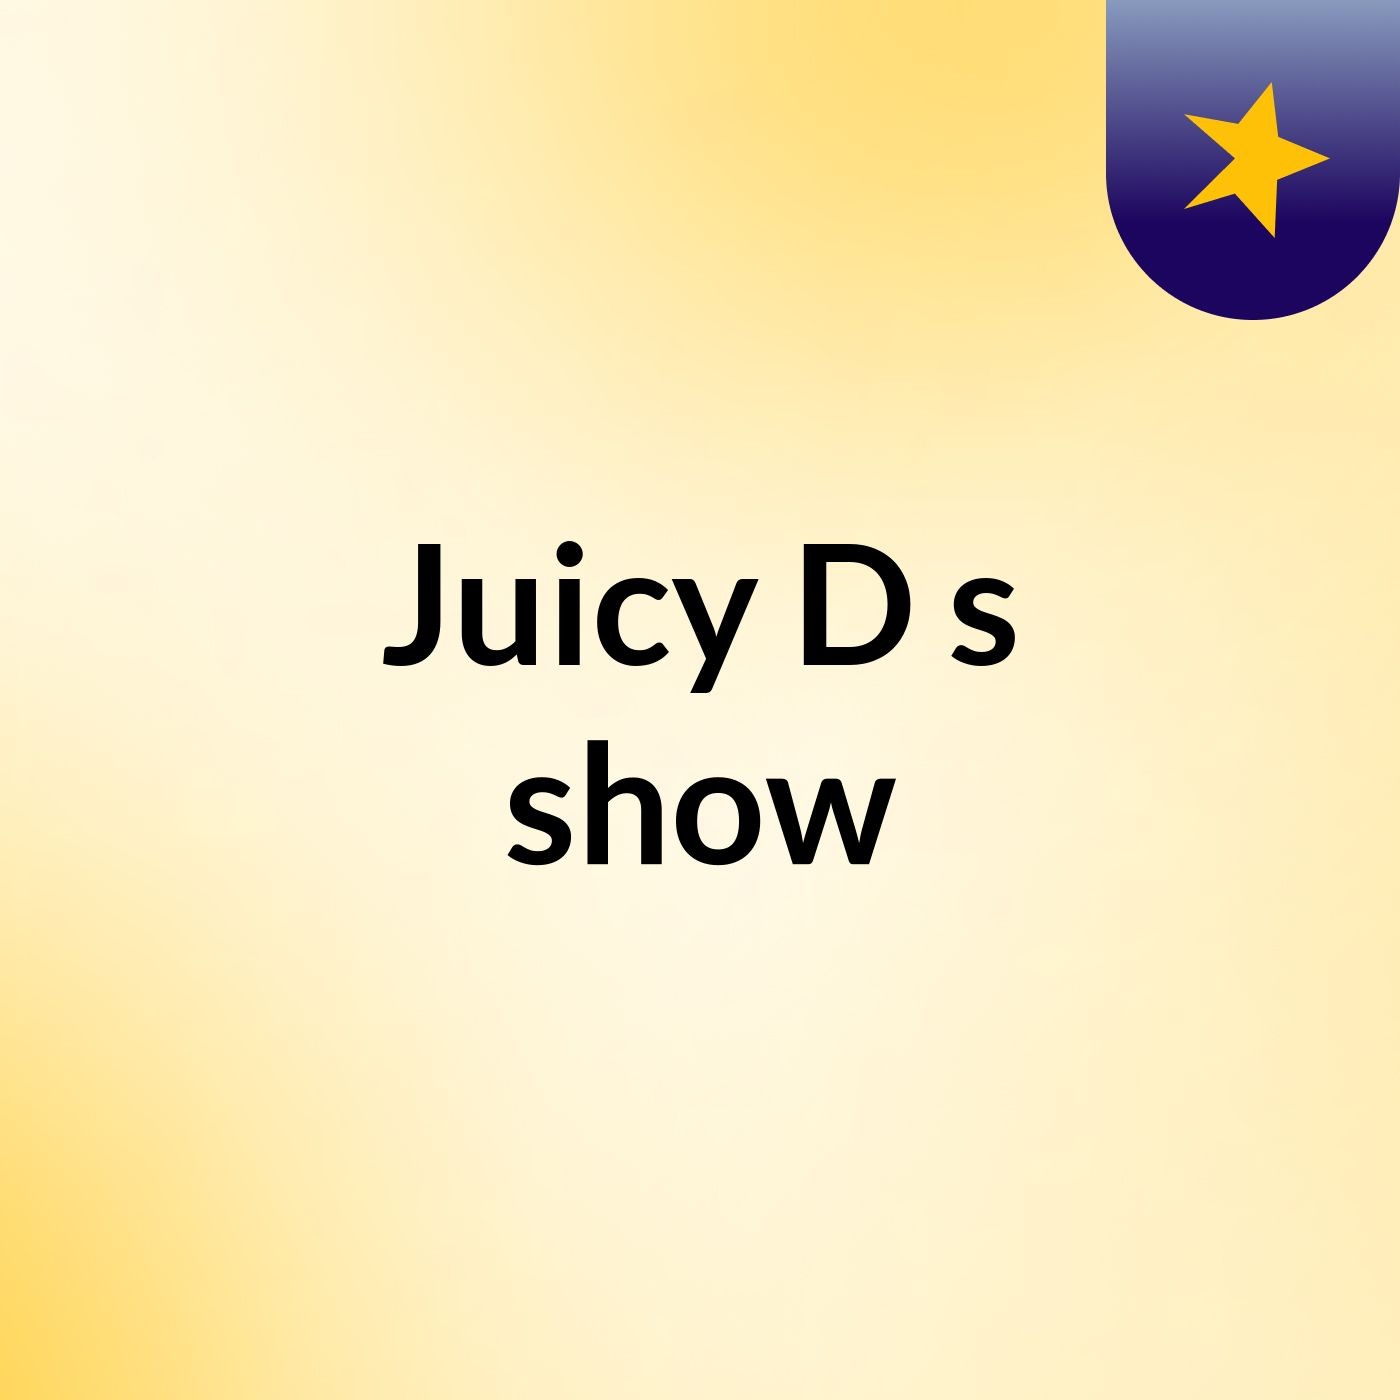 Juicy D's show